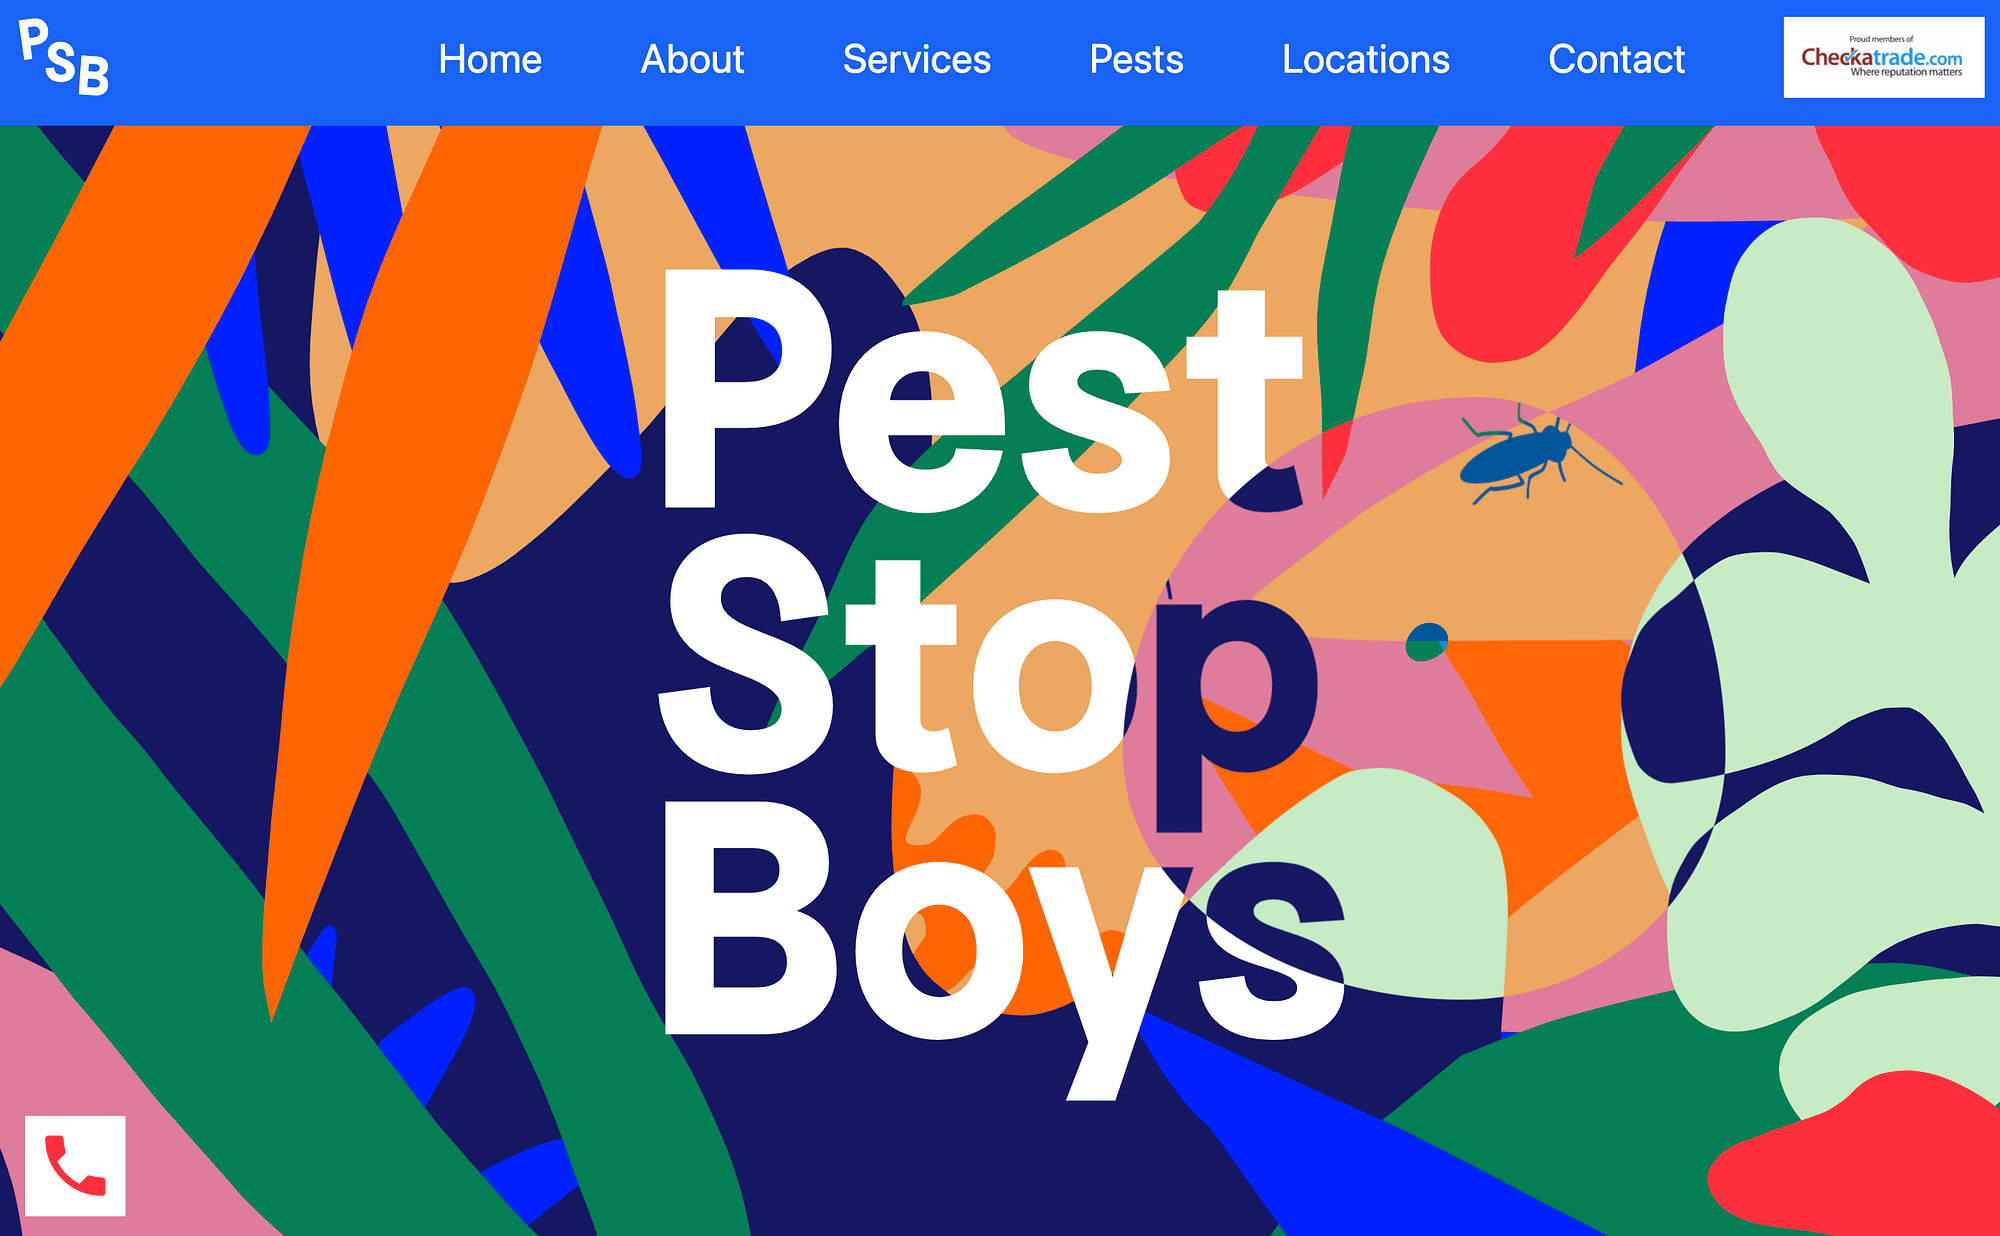 The Pest Stop Boys site.